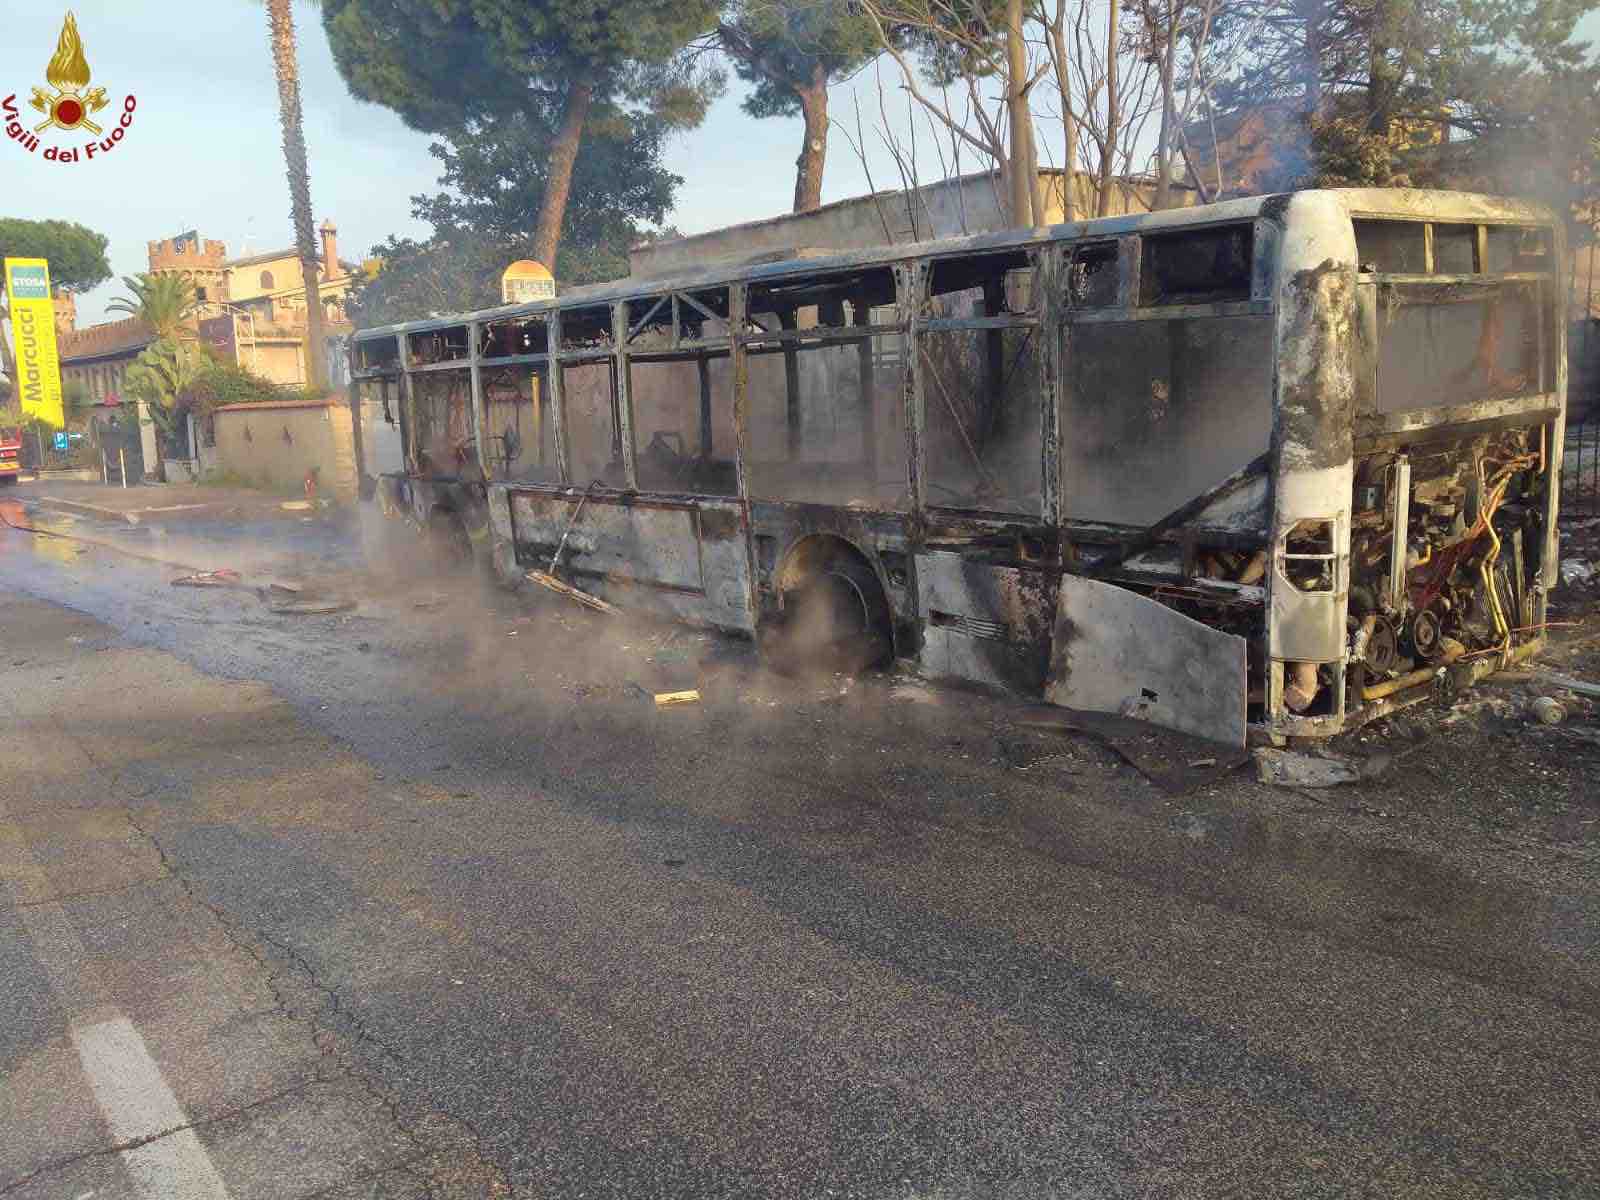 bus in fiamme